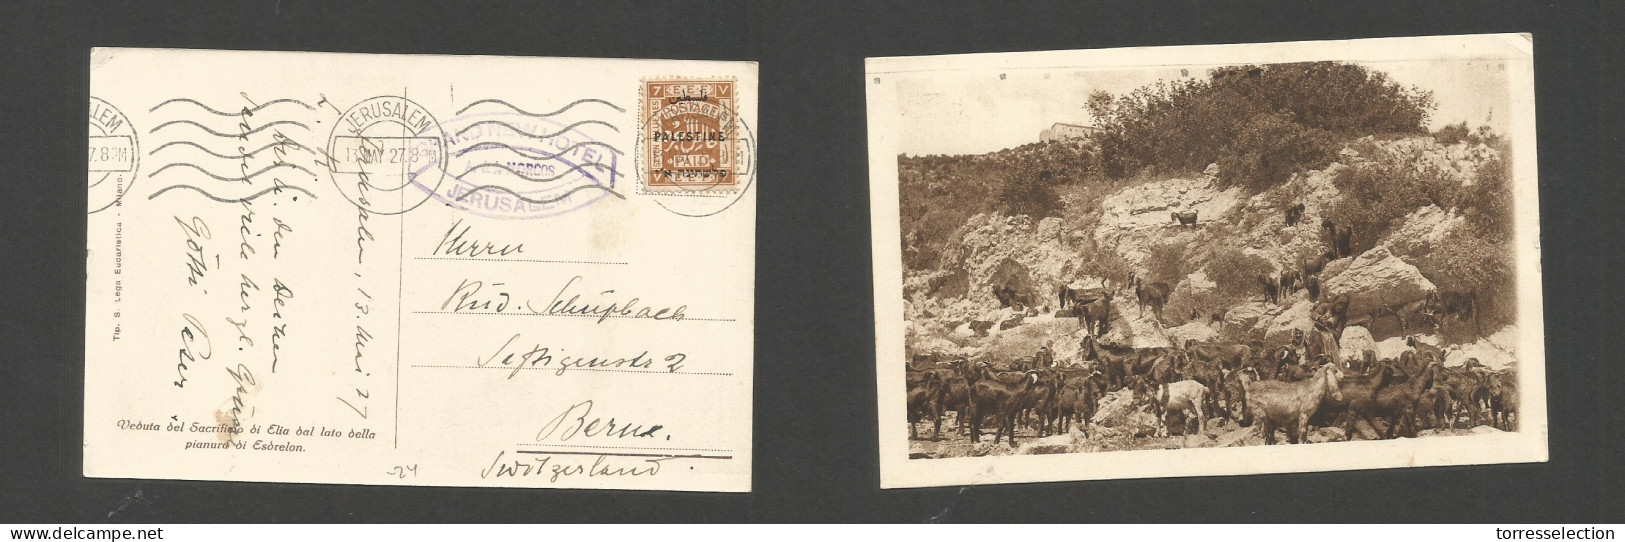 PALESTINE. 1927 (13 May) Jerusalem - Switzerland, Bern. Fkd Ppc. Gorts At Esbrelon. Ovptd Issue Rolling Cachet. SALE. - Palästina